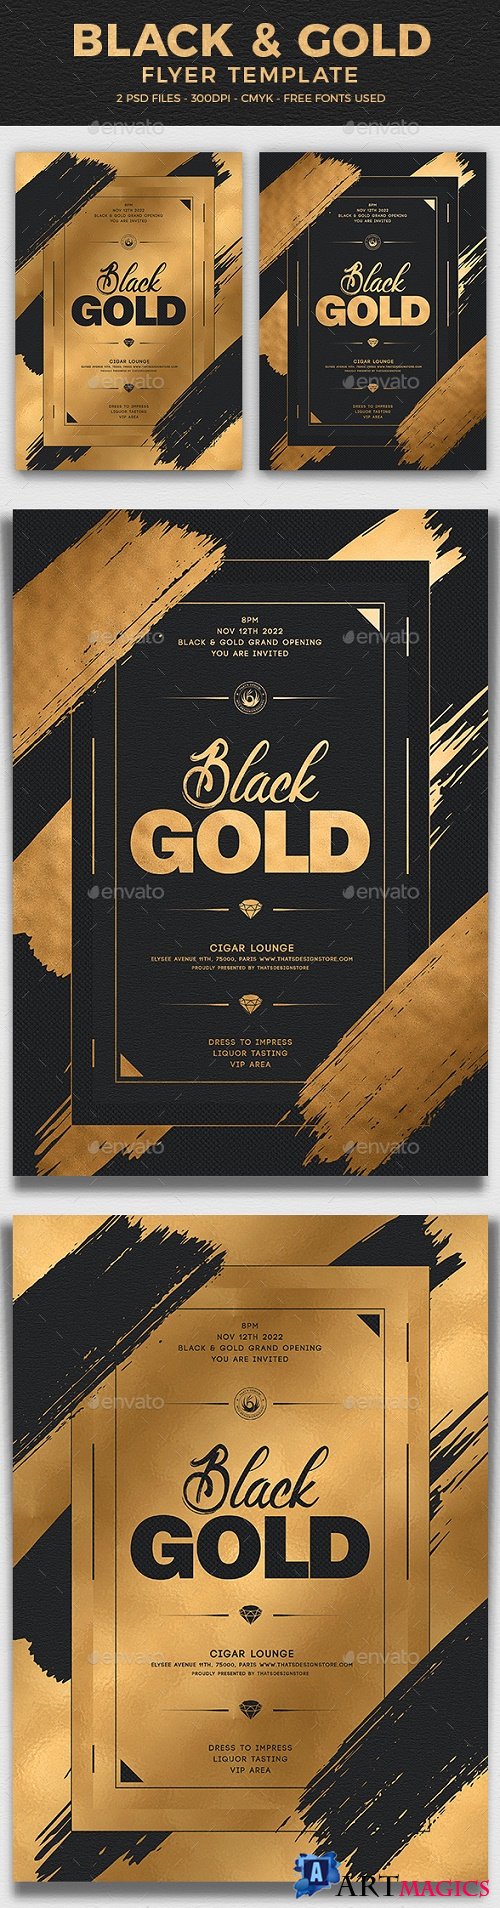 Black and Gold Flyer Template V15 - 25121989 - 4321812